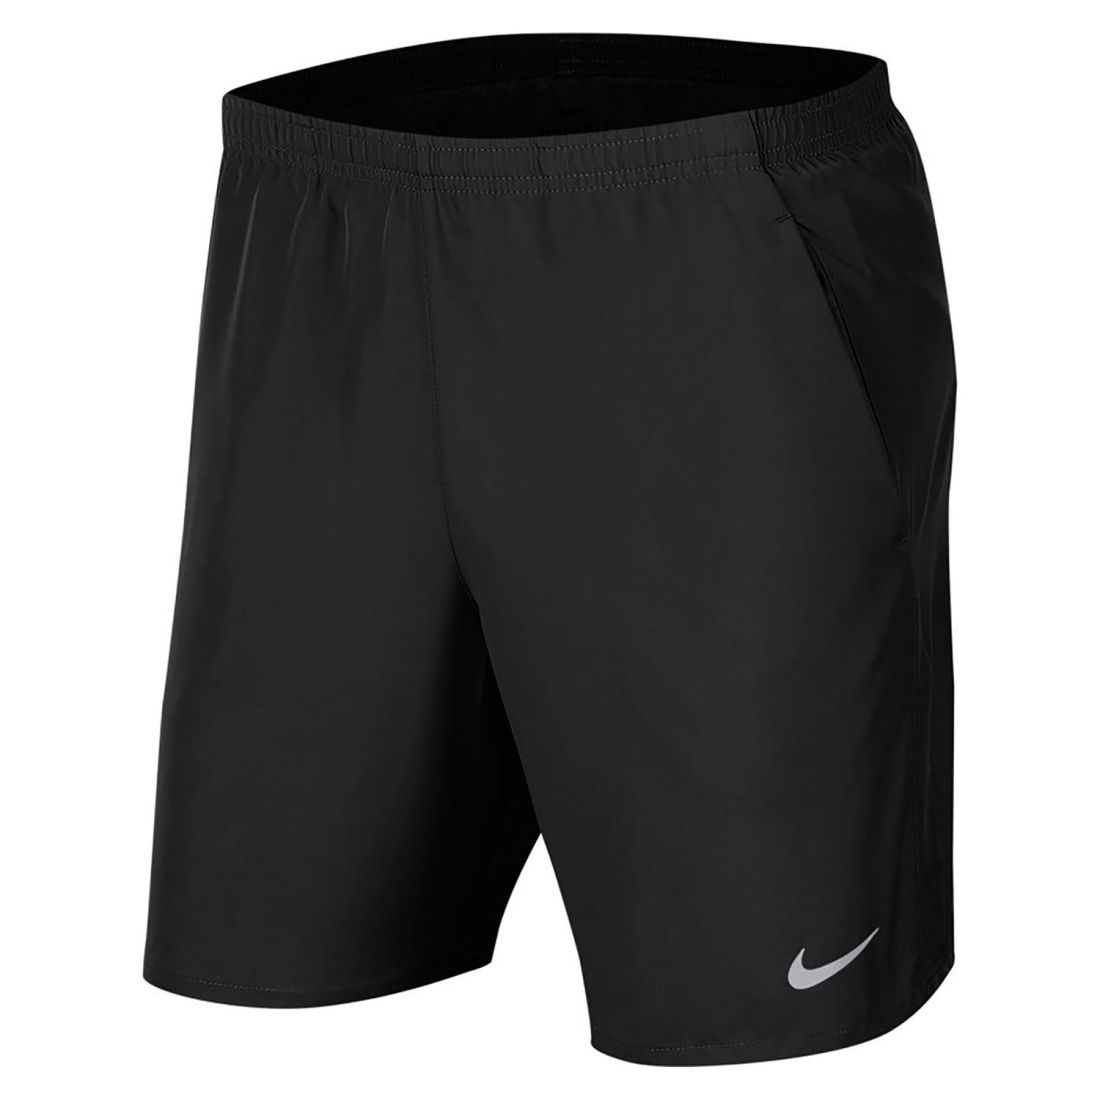 Мужские шорты для бега Nike Men's 7" Running Shorts